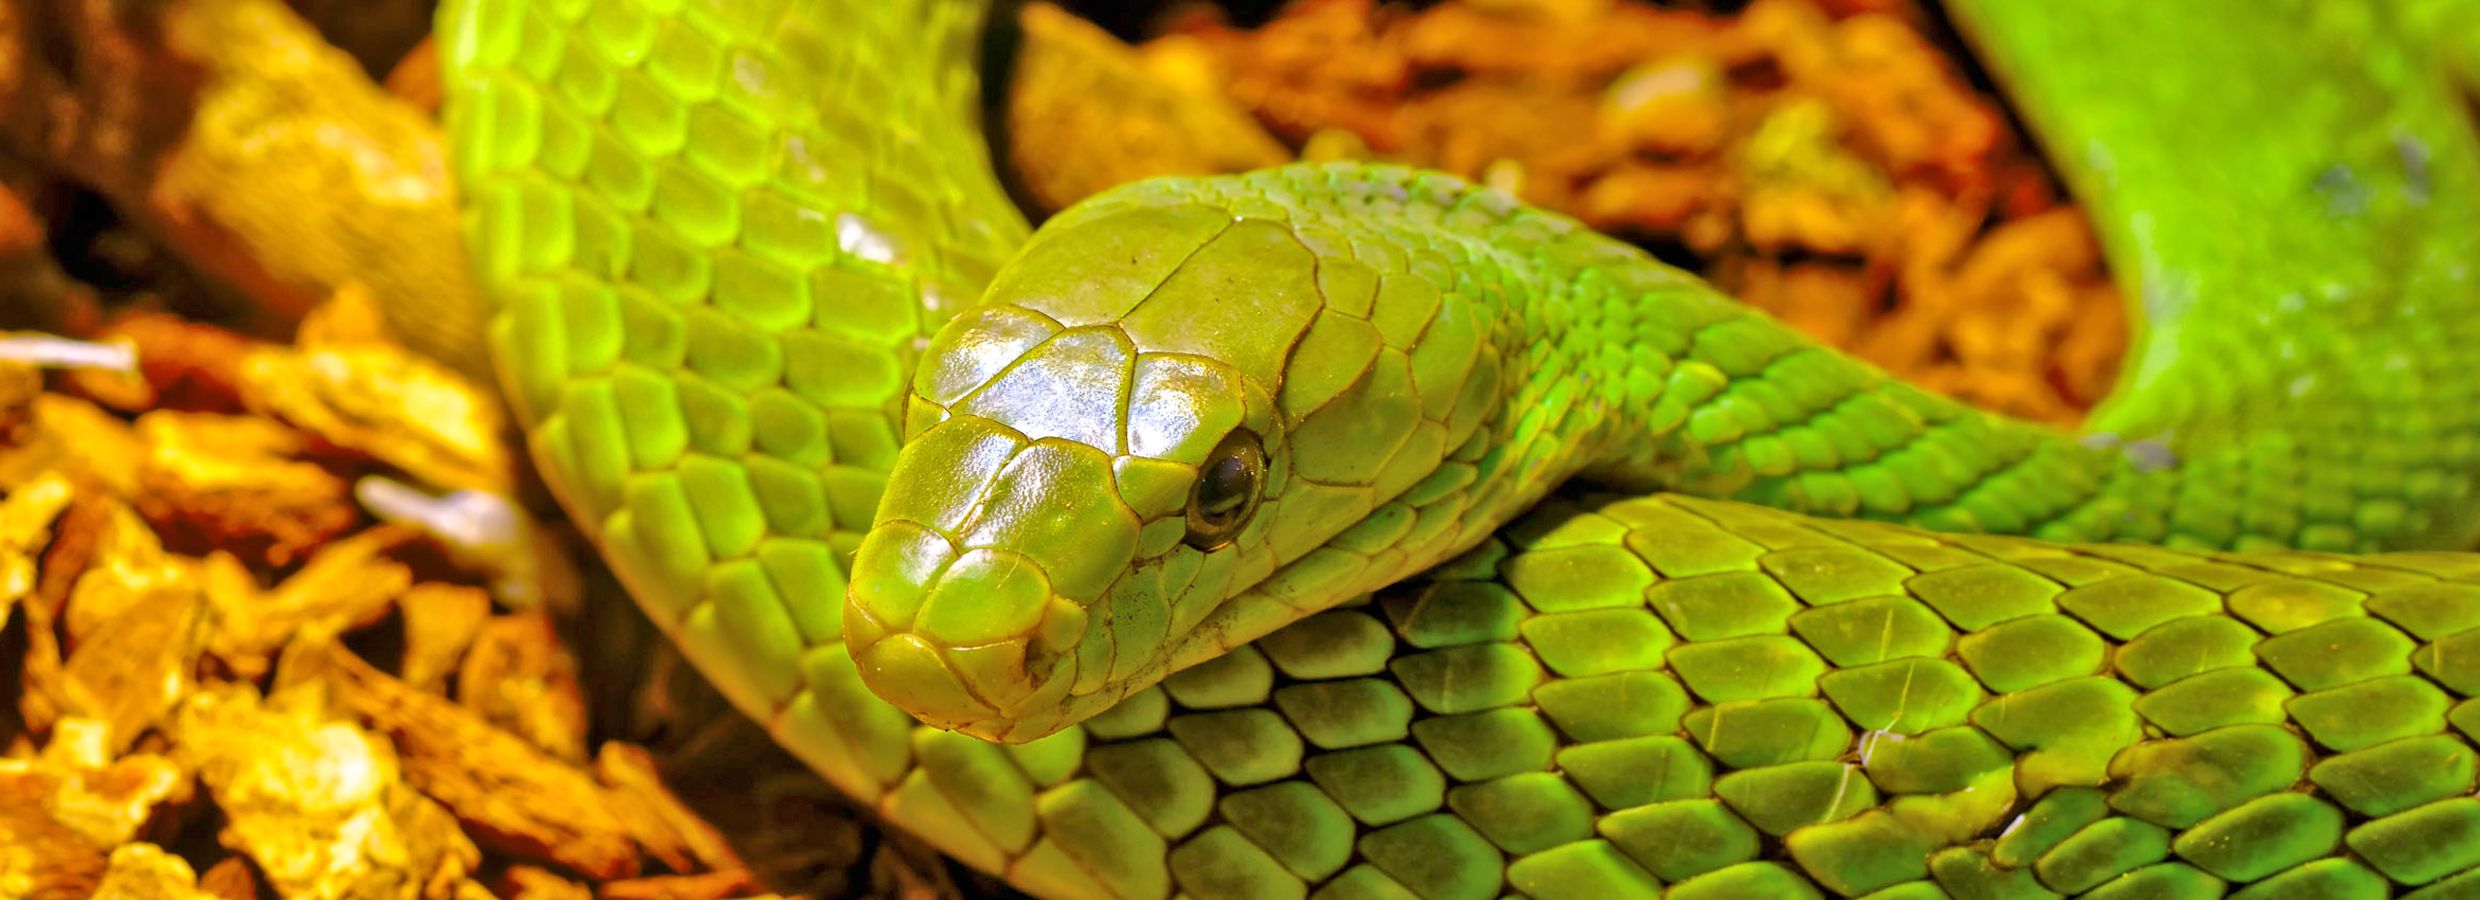 corn snake prices petsmart